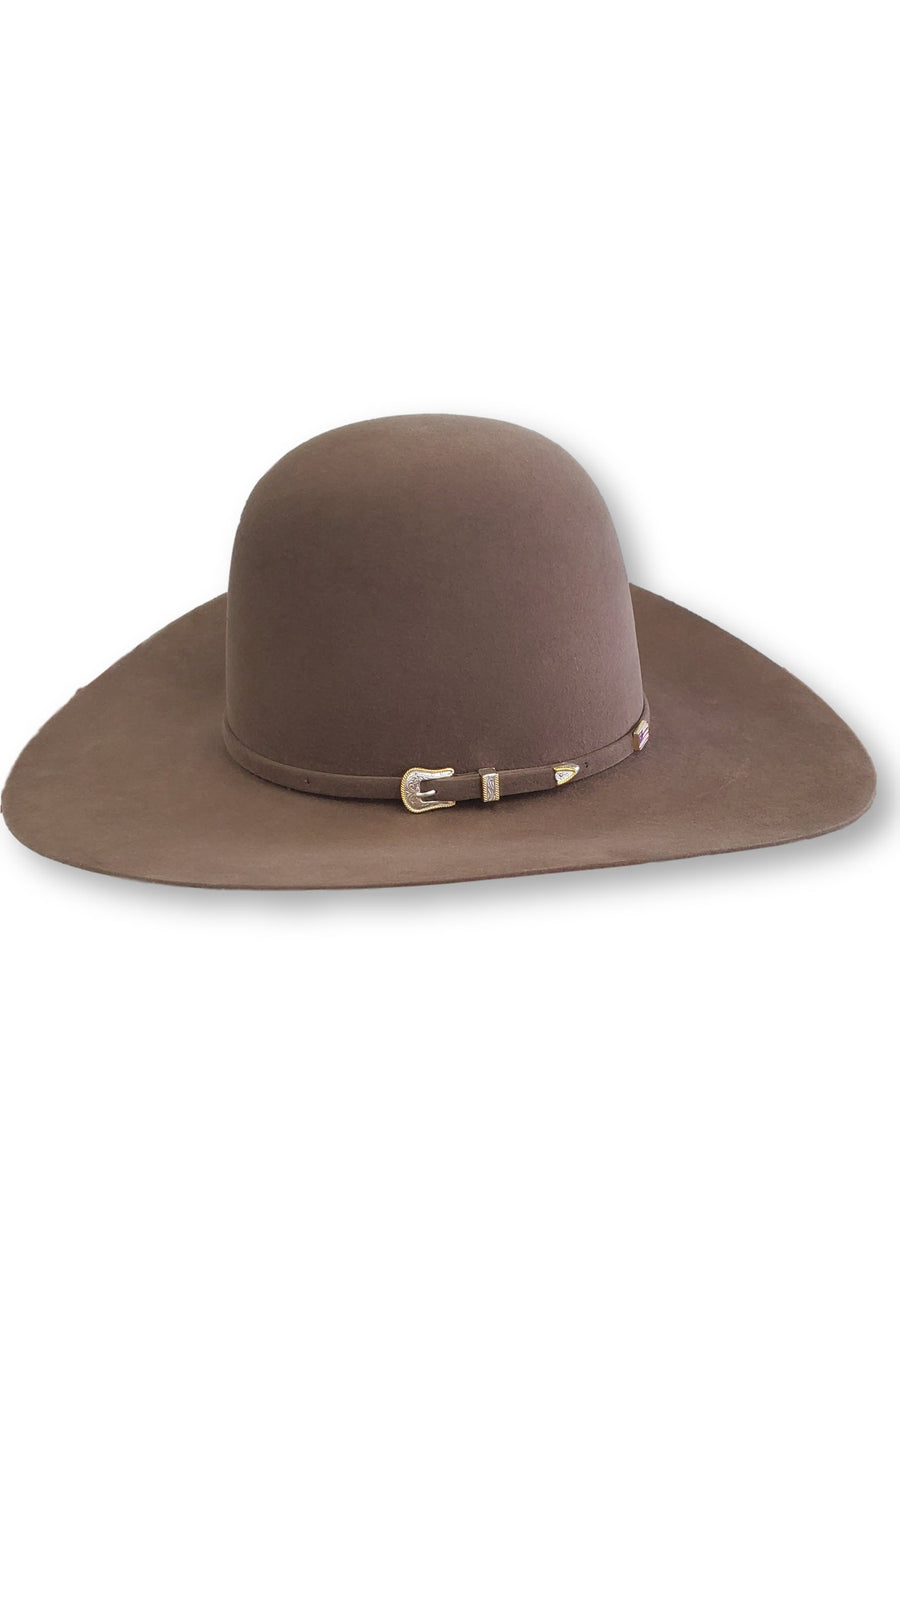 American Hat Co. - 10X Pecan Felt Cowboy Hat - Open Crown